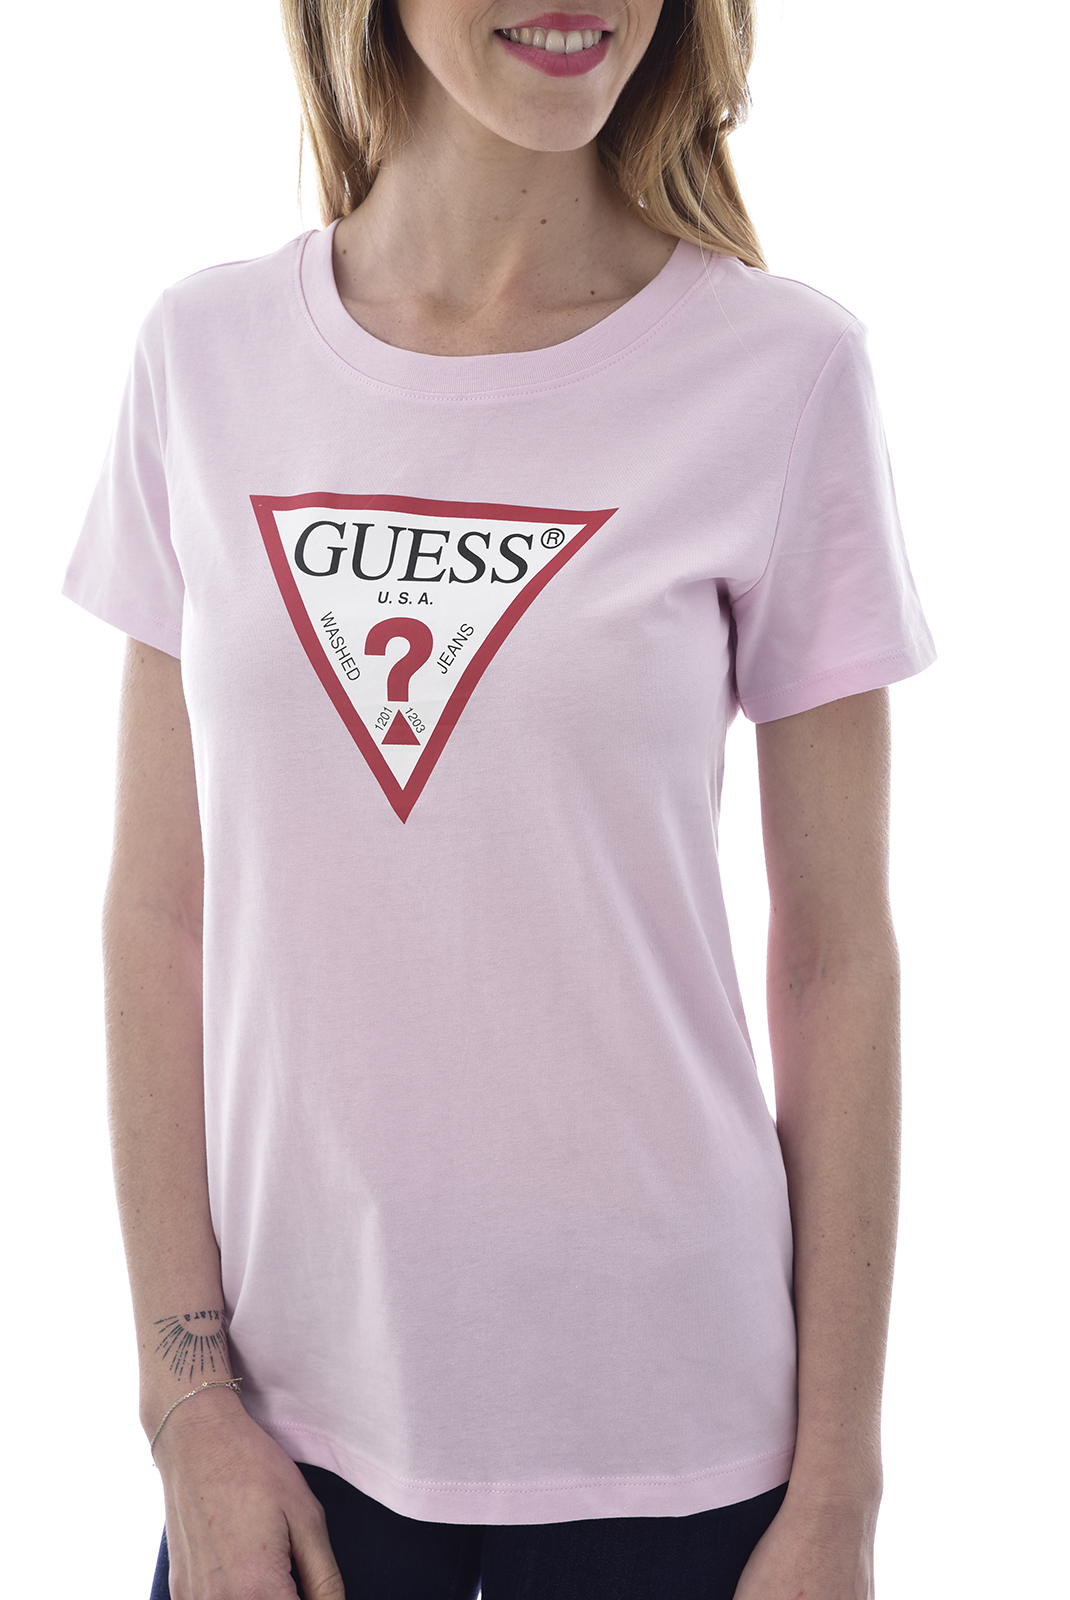 Tee-shirt rose manches courtes femme - Guess W0gi06